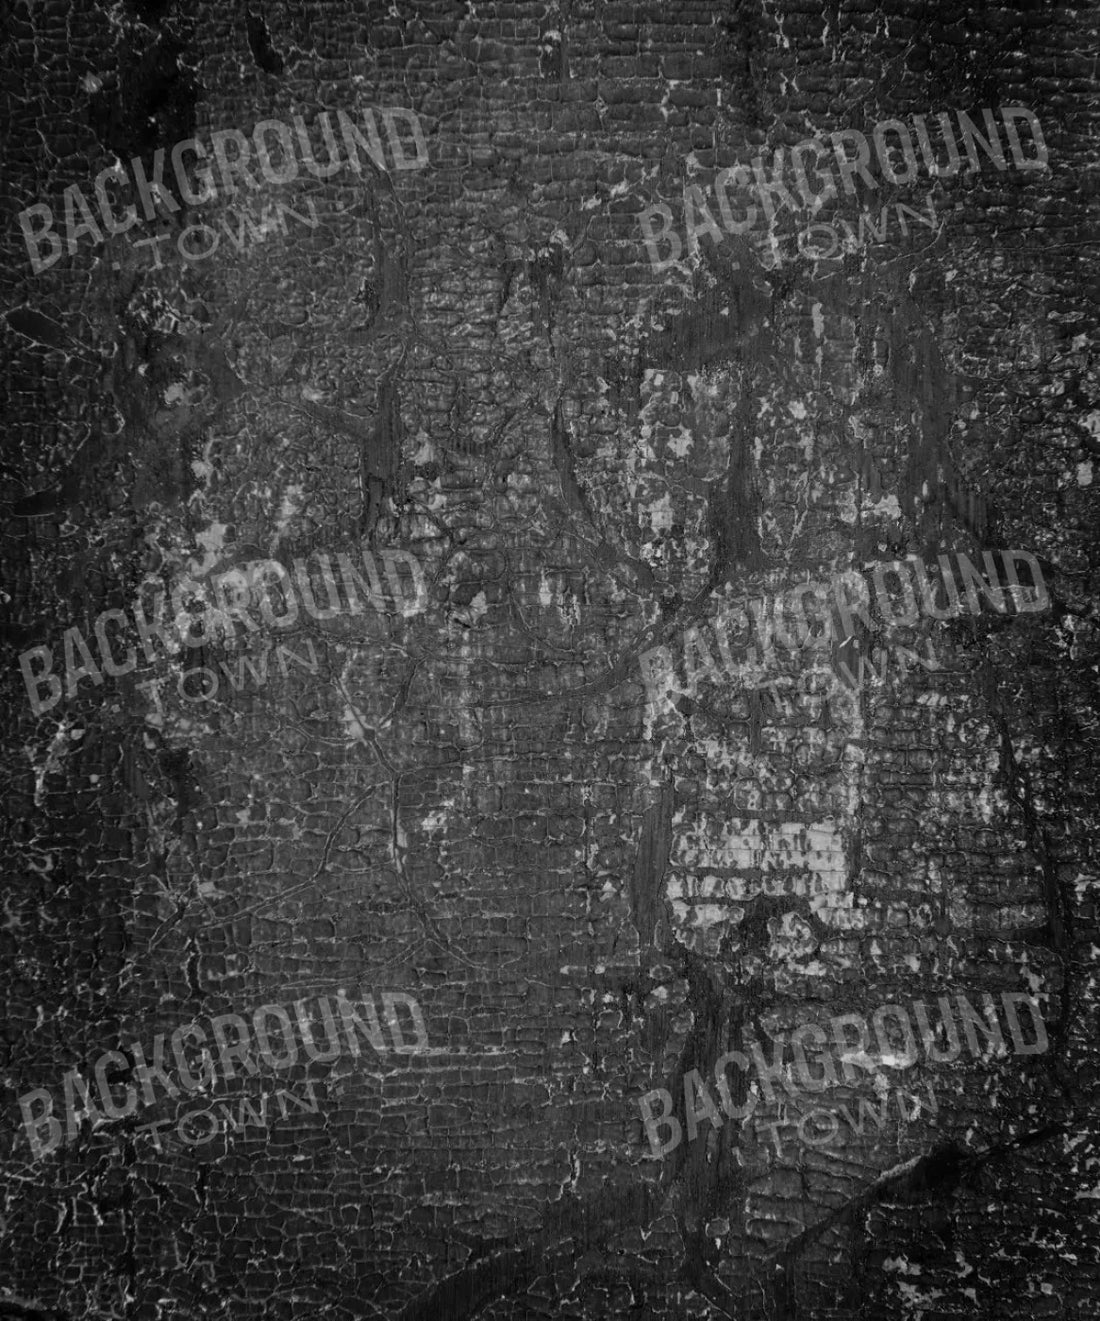 Black Urban Grunge Backdrop for Photography